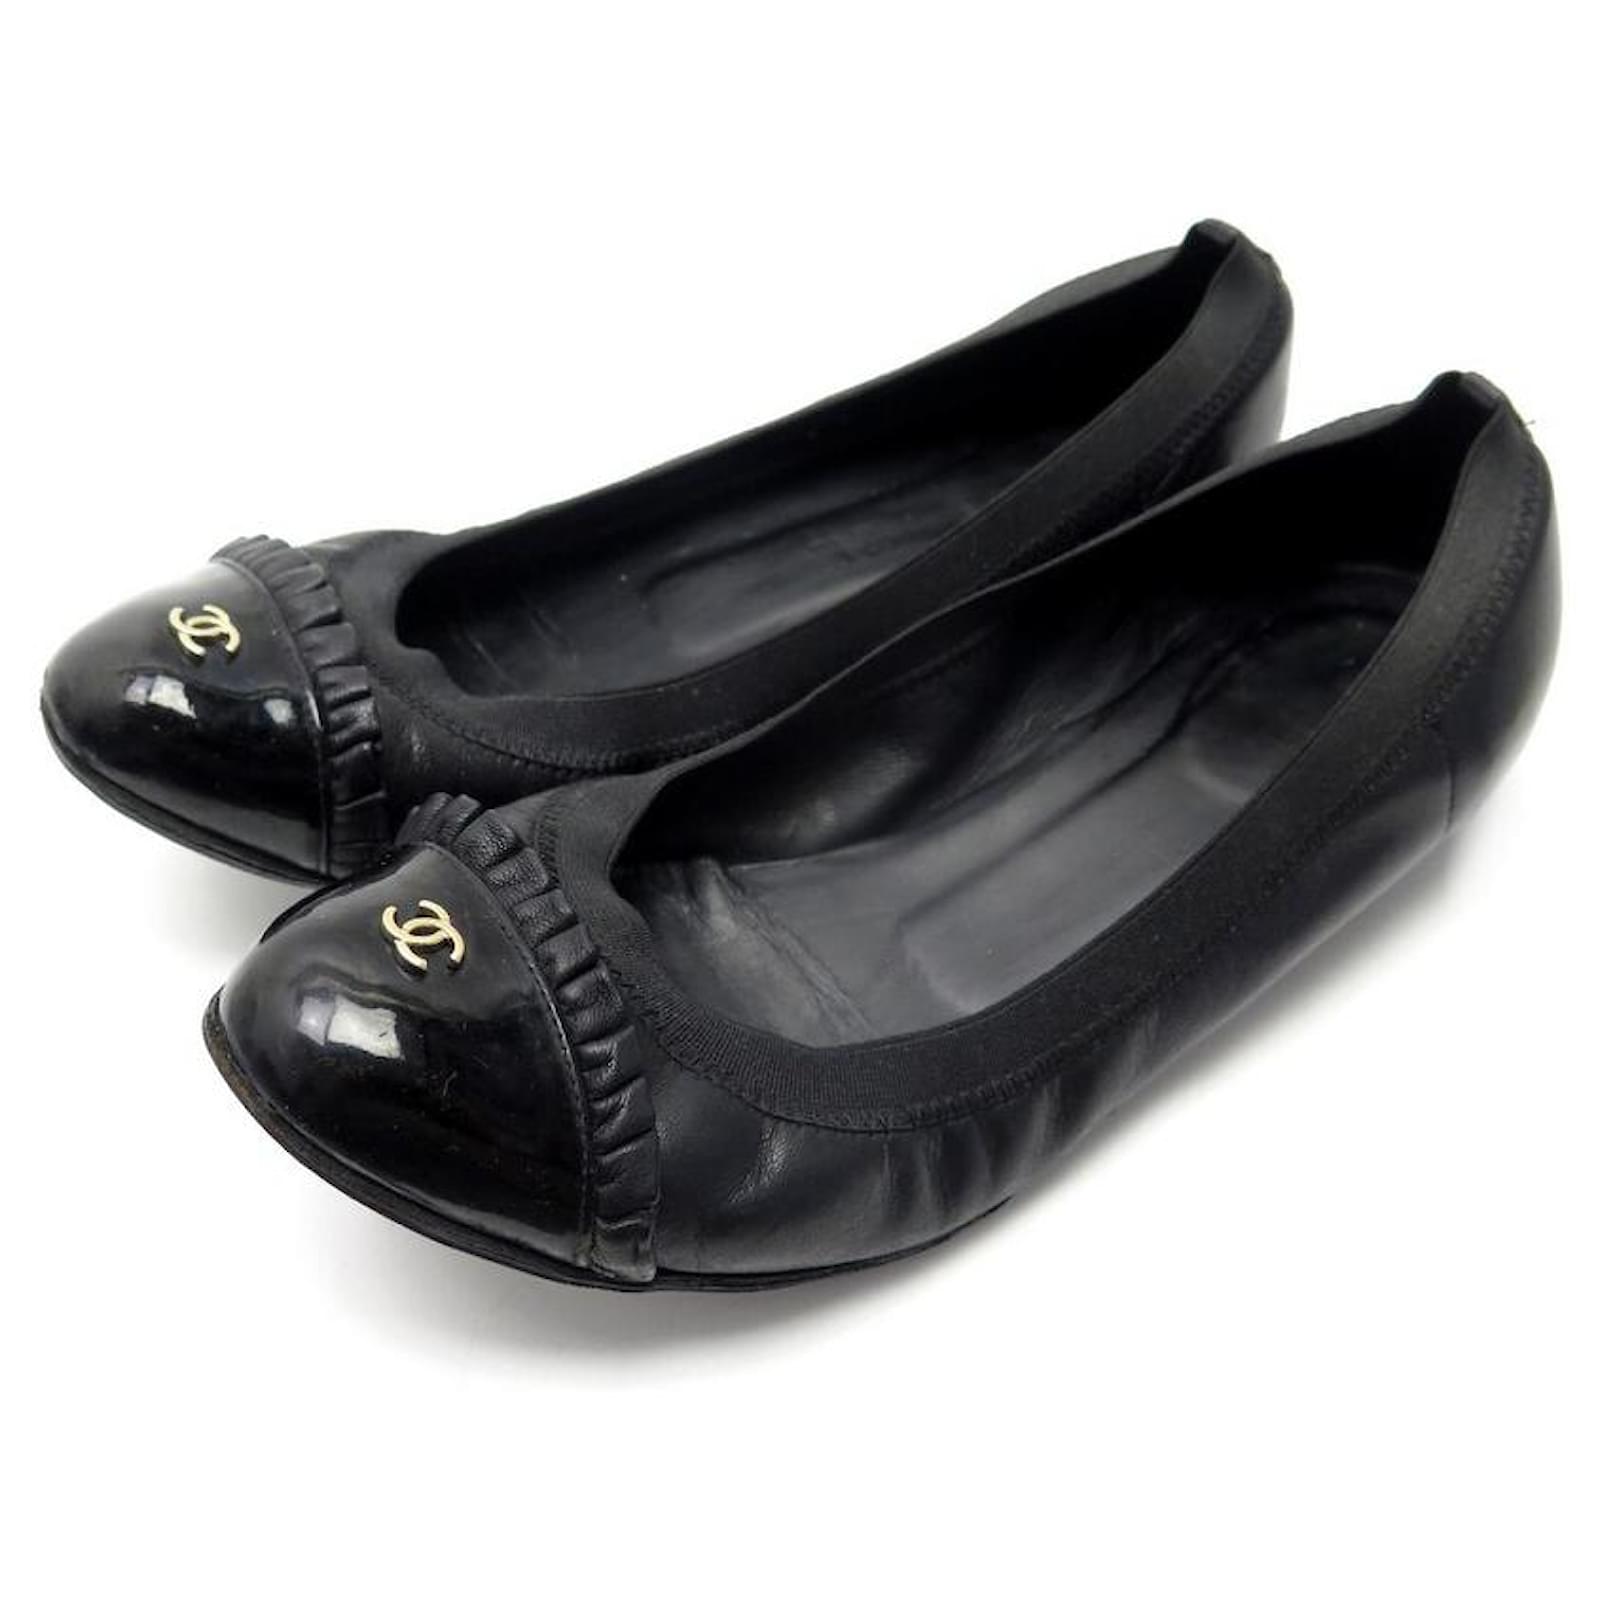 Chanel Camellia Flower CC Logo Black Leather Gladiator Flat Sandals 35 5  $1425